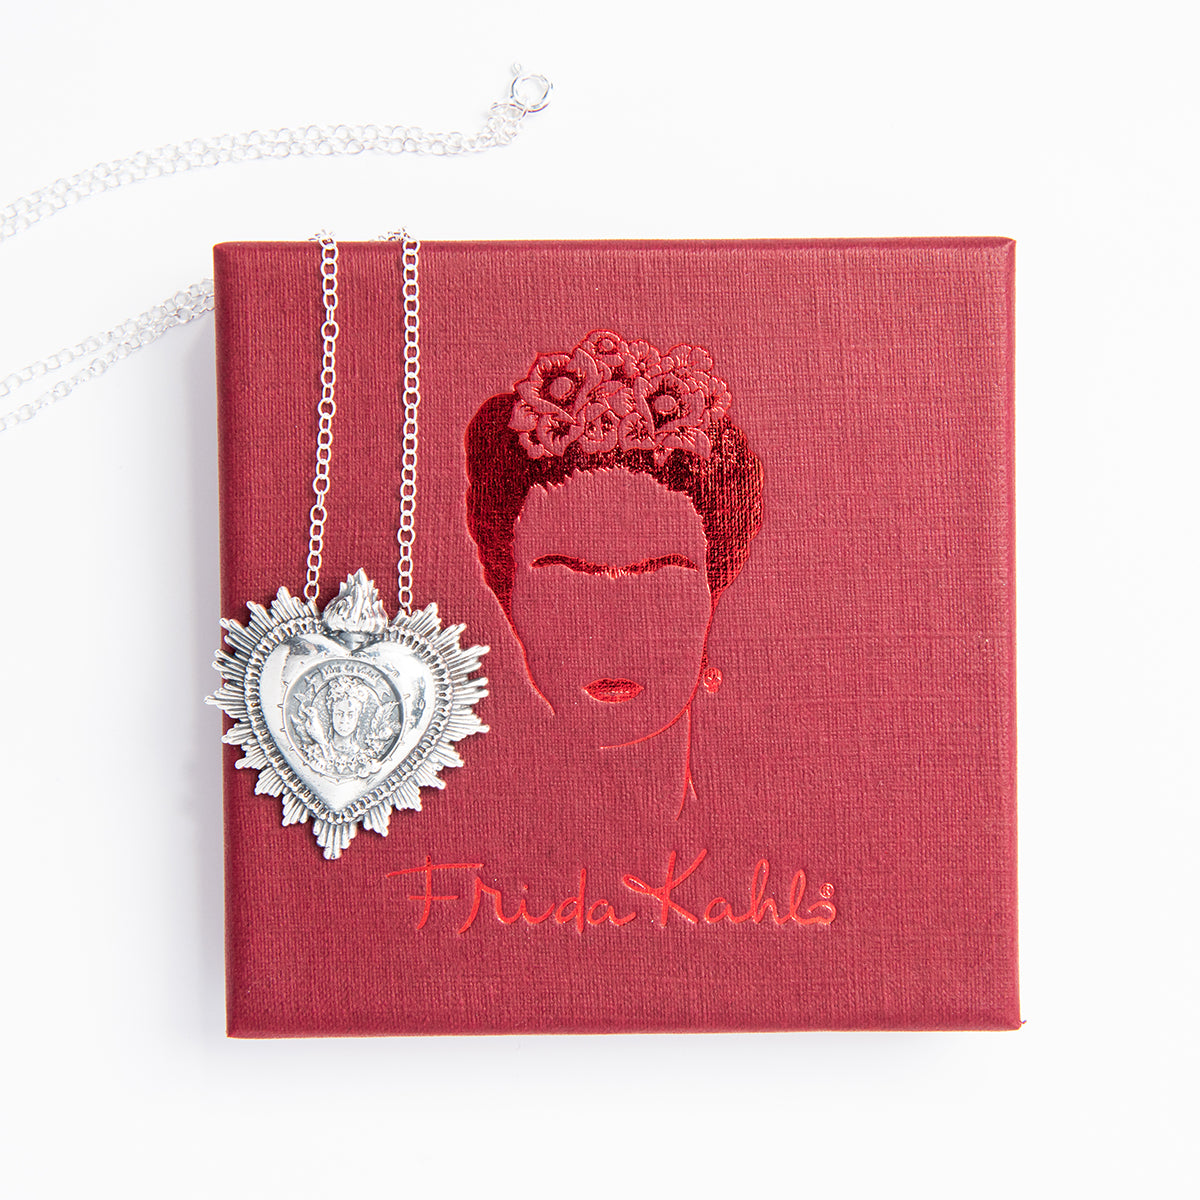 Frida Kahlo Viva La Vida Heart Silver Necklace